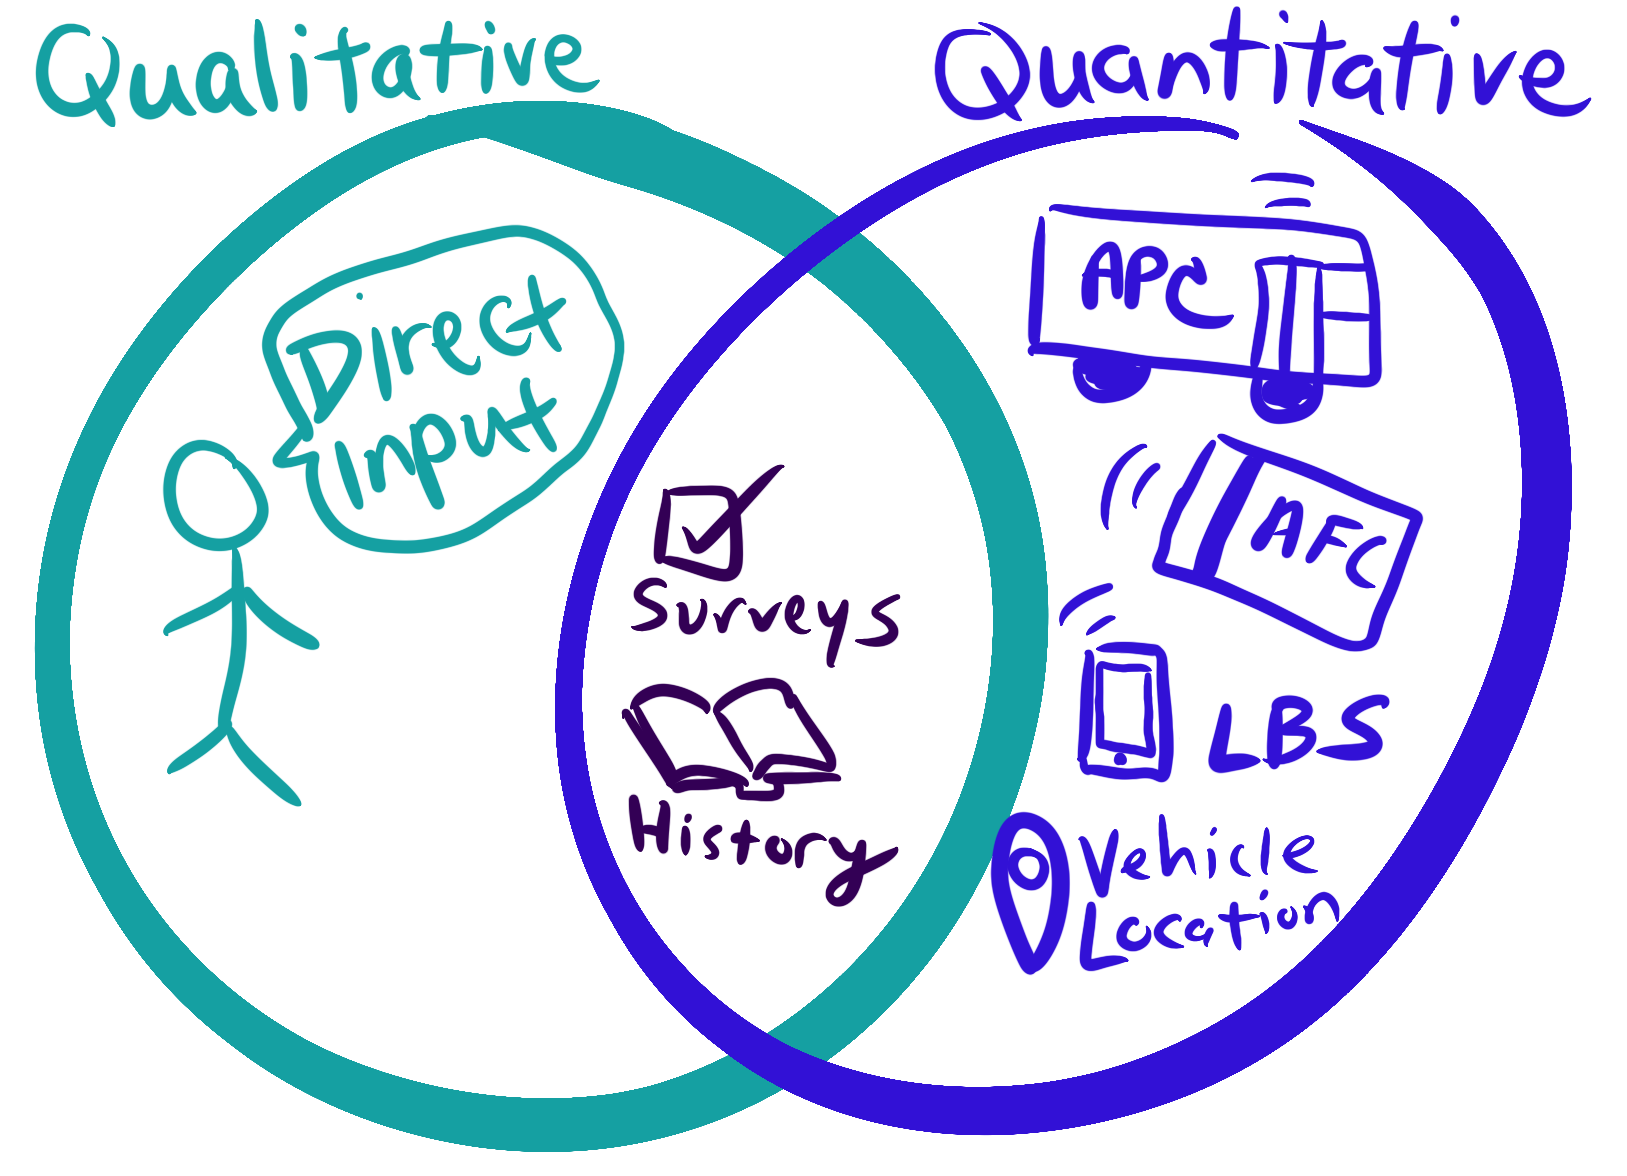 Venn Diagram with a circle representing Qualitative data sources and a circle representing Quantitative data sources